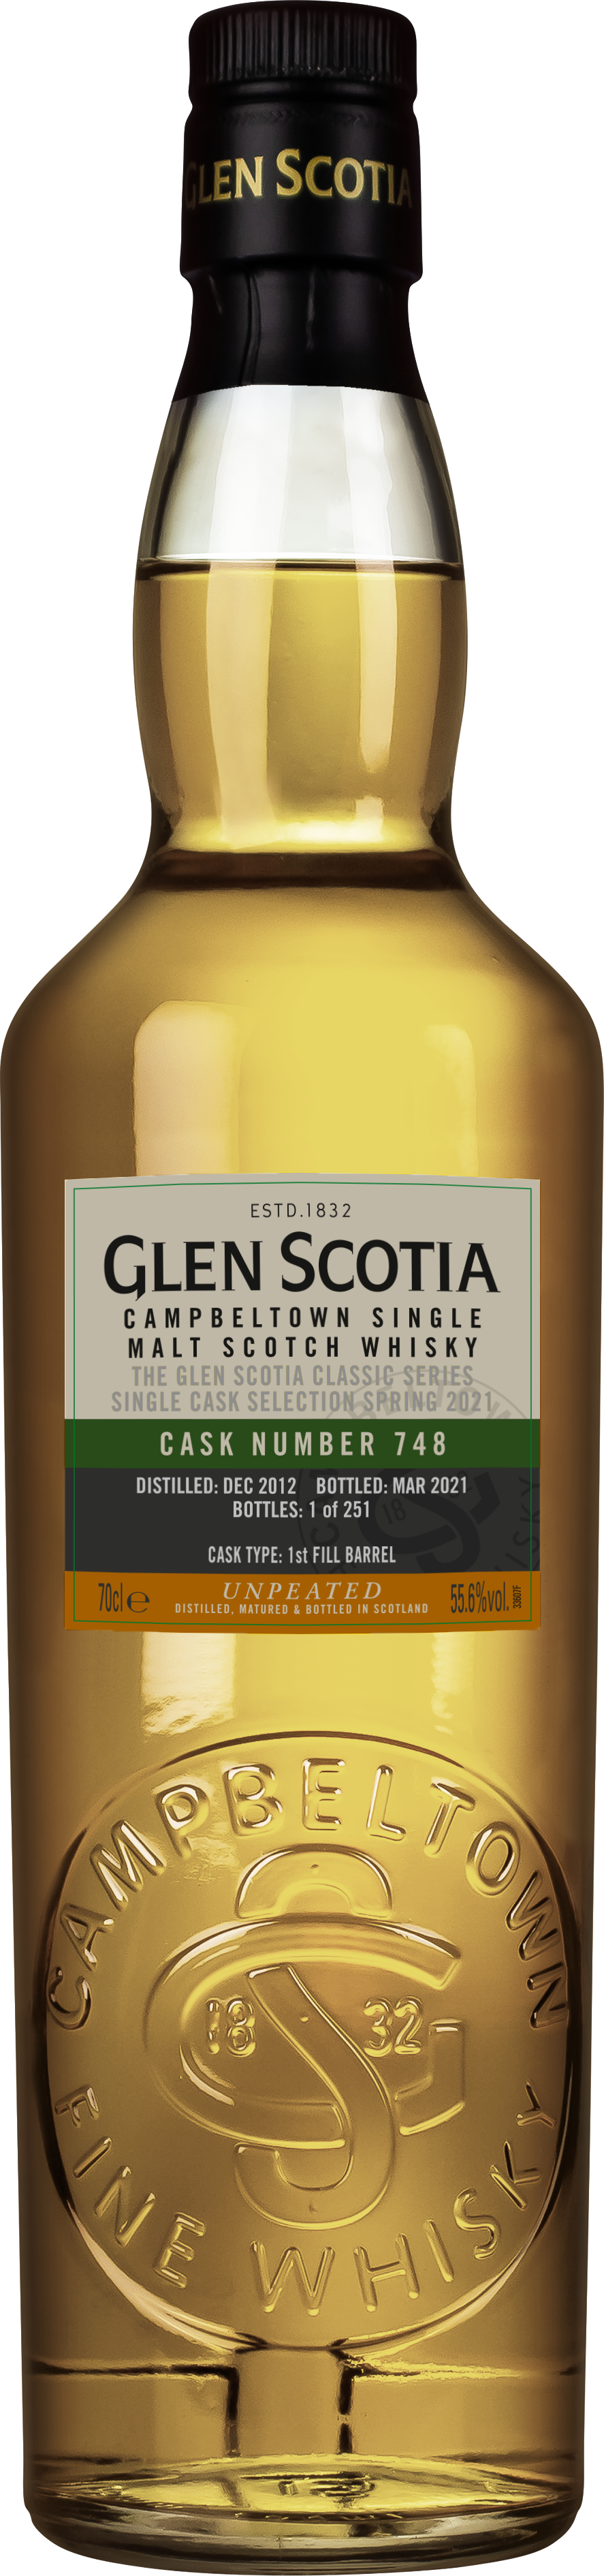 Glen Scotia Vintage 2012 1st Fill Bourbon #2